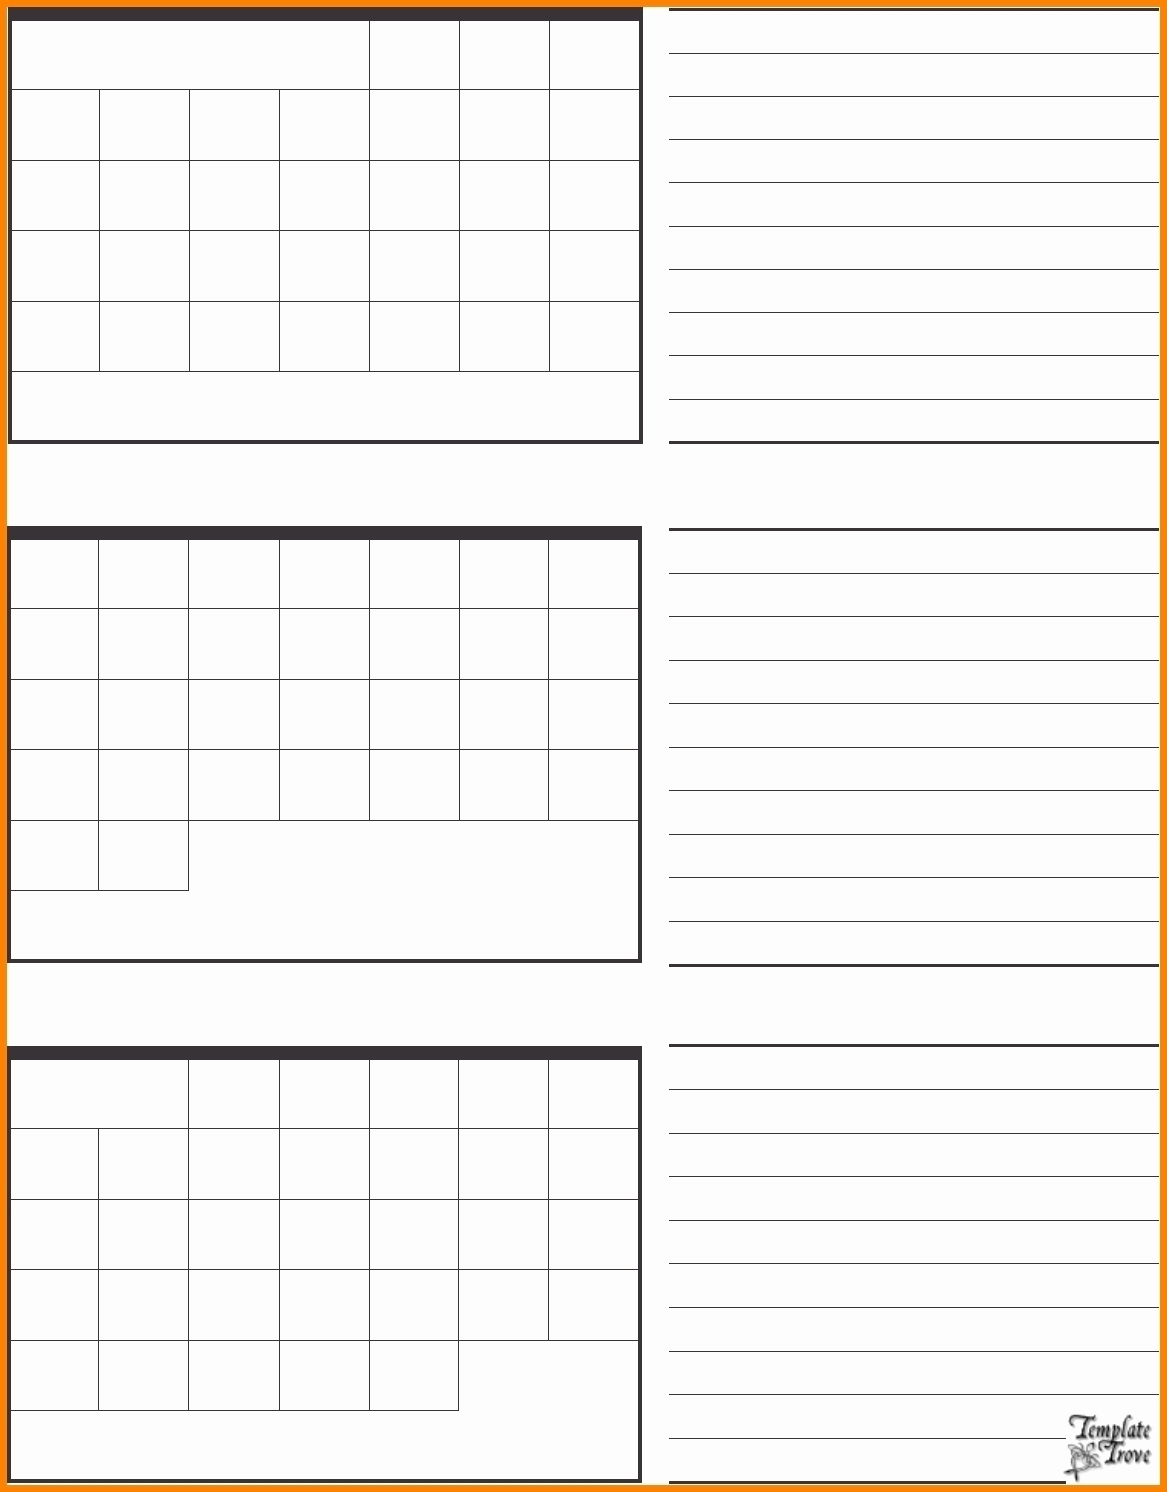 Printable Blank 3 Month Calendar Calendar Inspiration Design